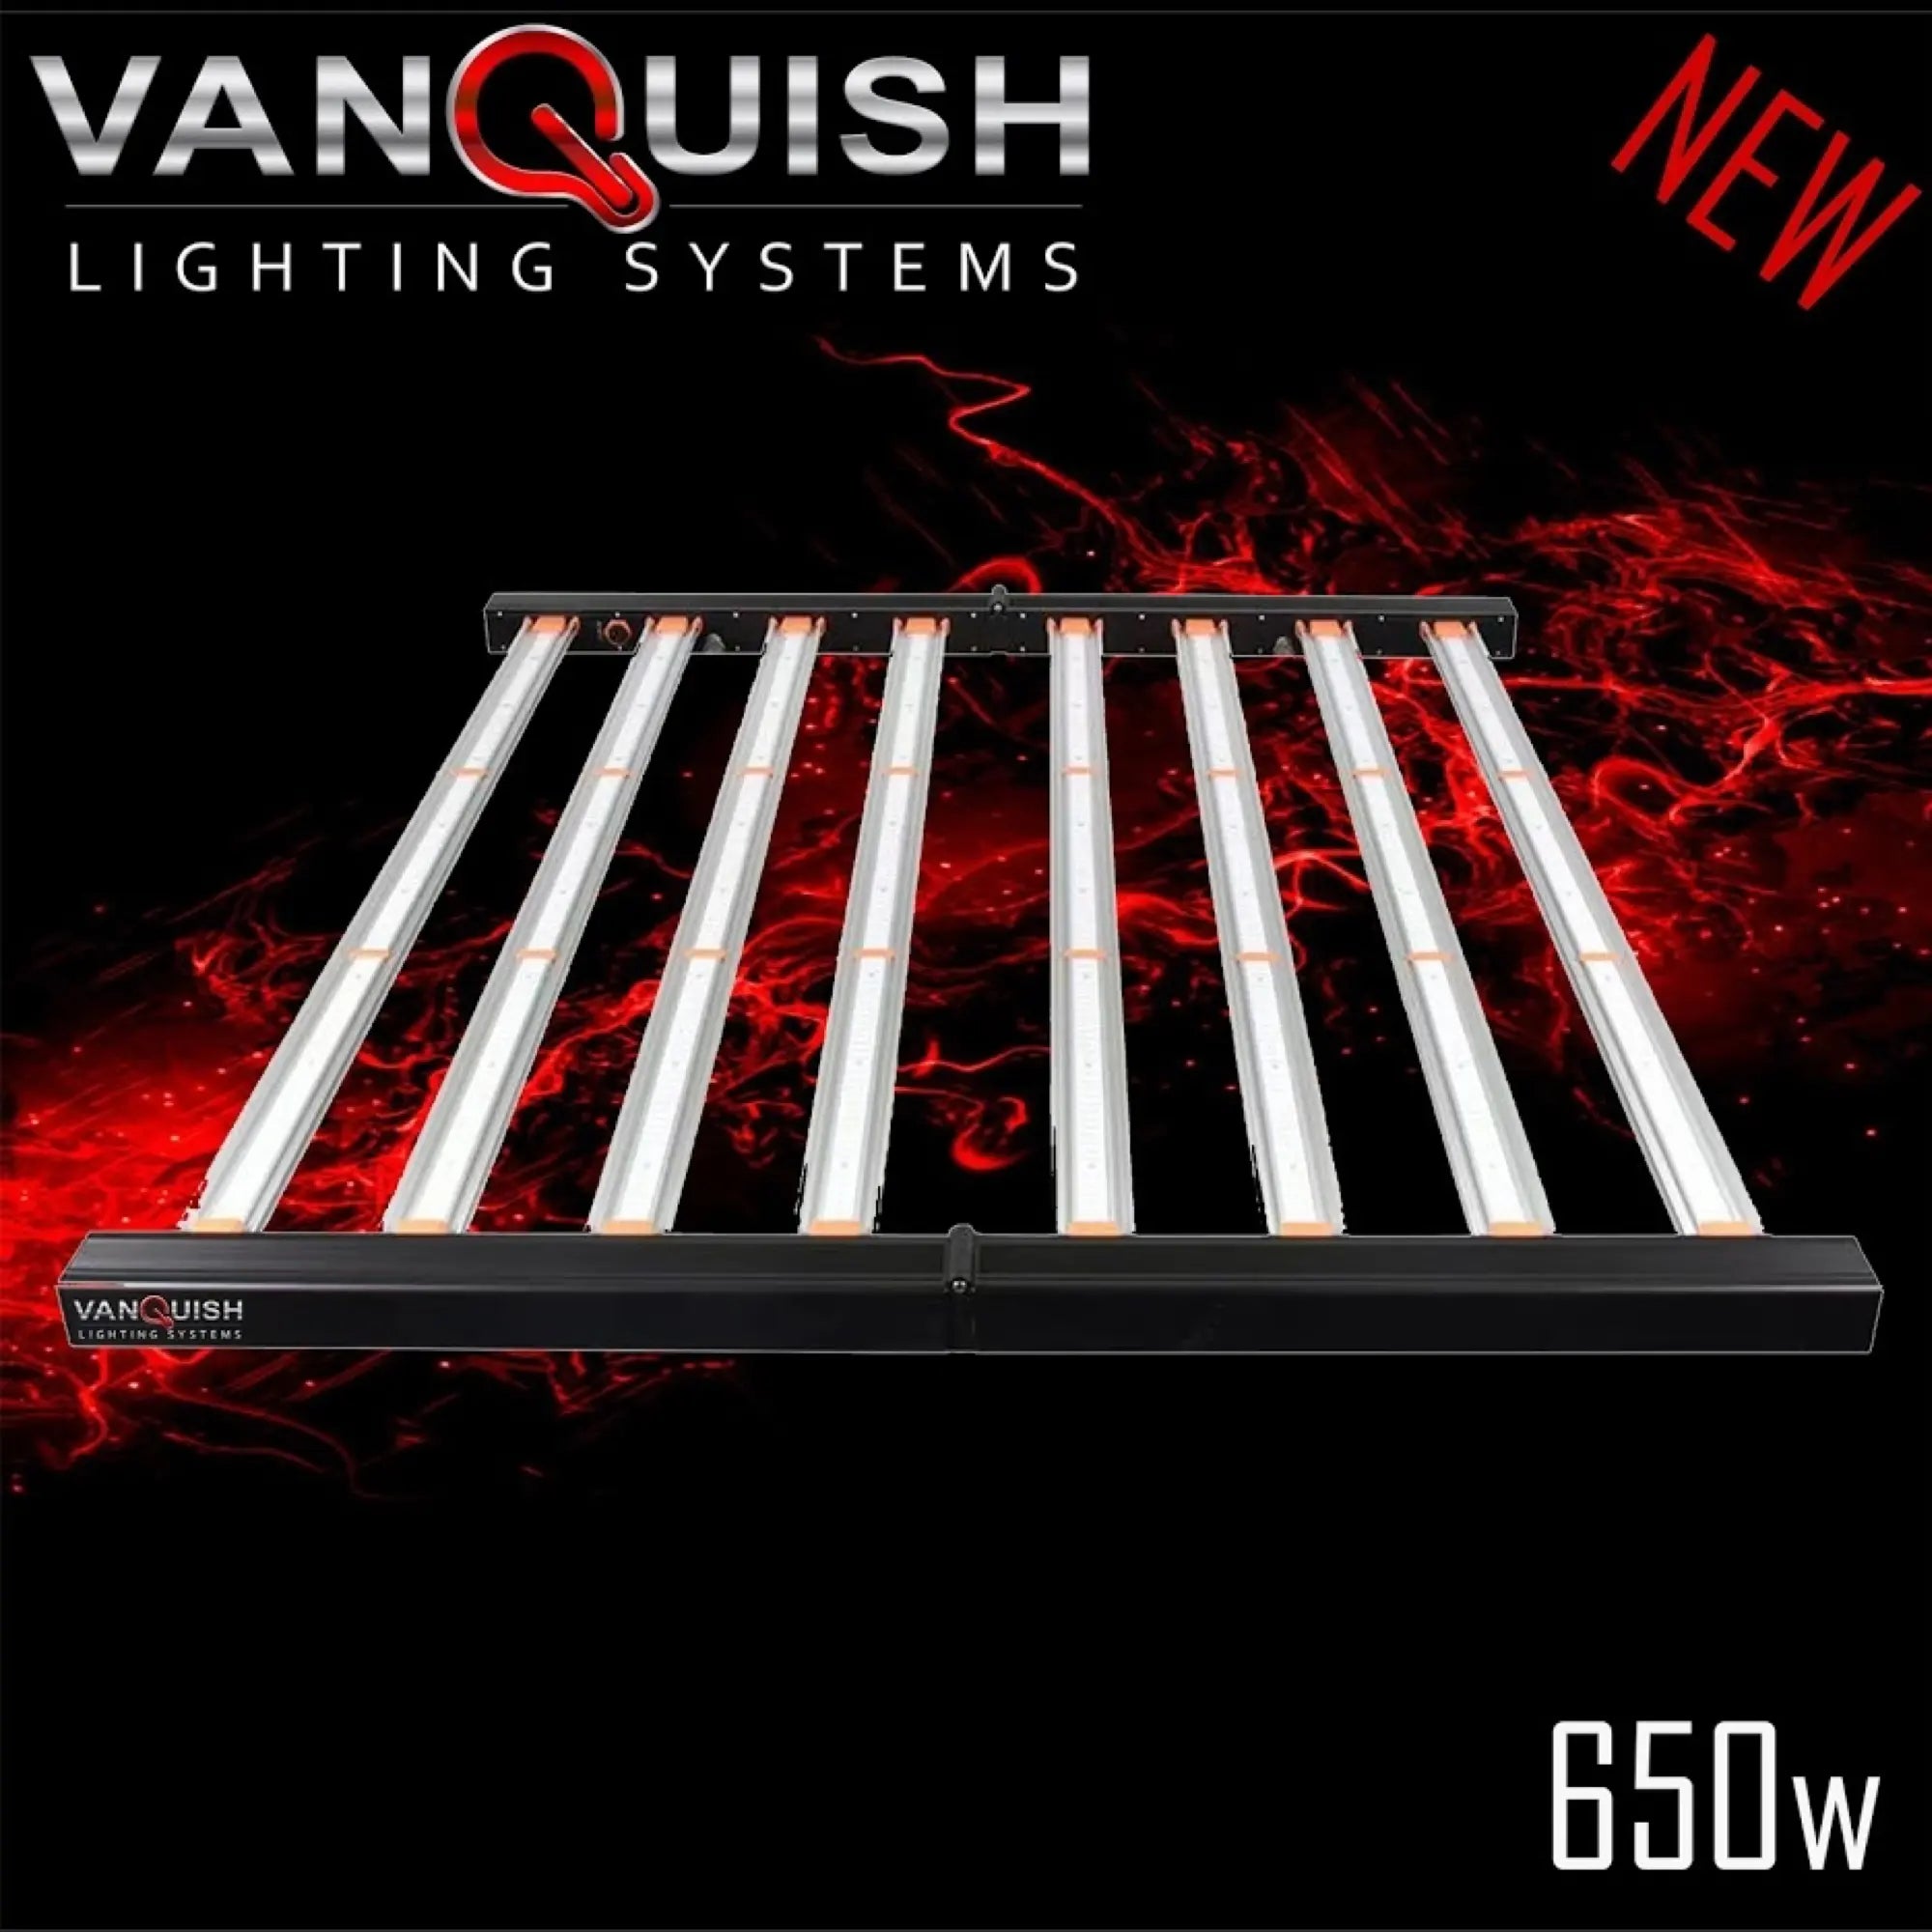 Vanquish 650W LED Grow Light Vanquish Lighting Systems